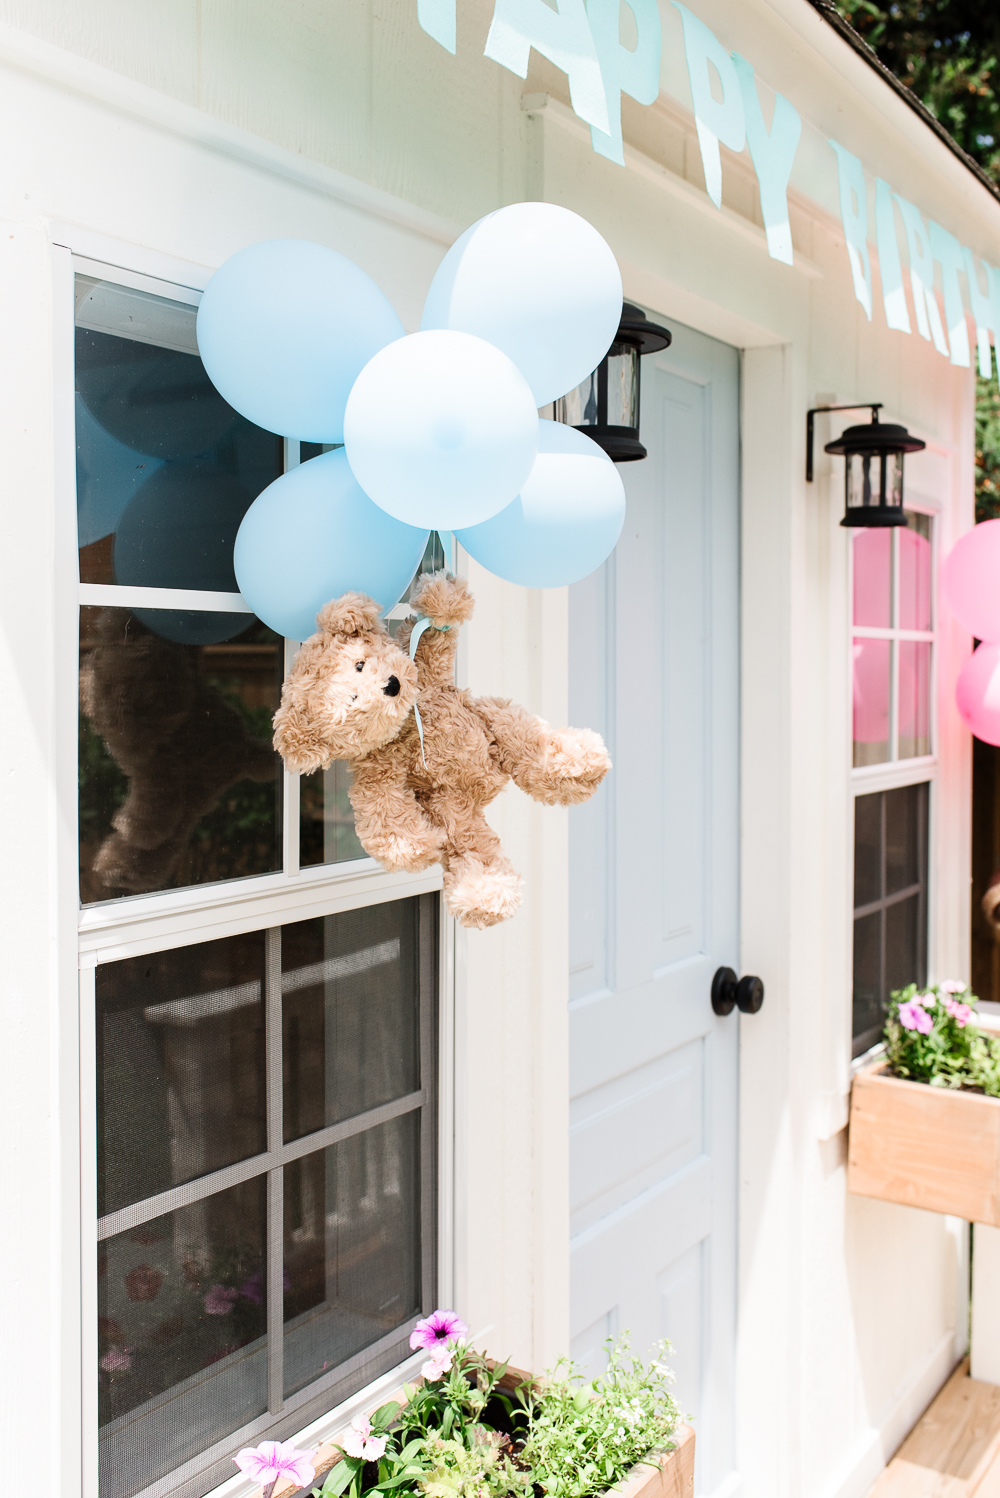 Teddy bears themed children's - Party Decoration Ideas